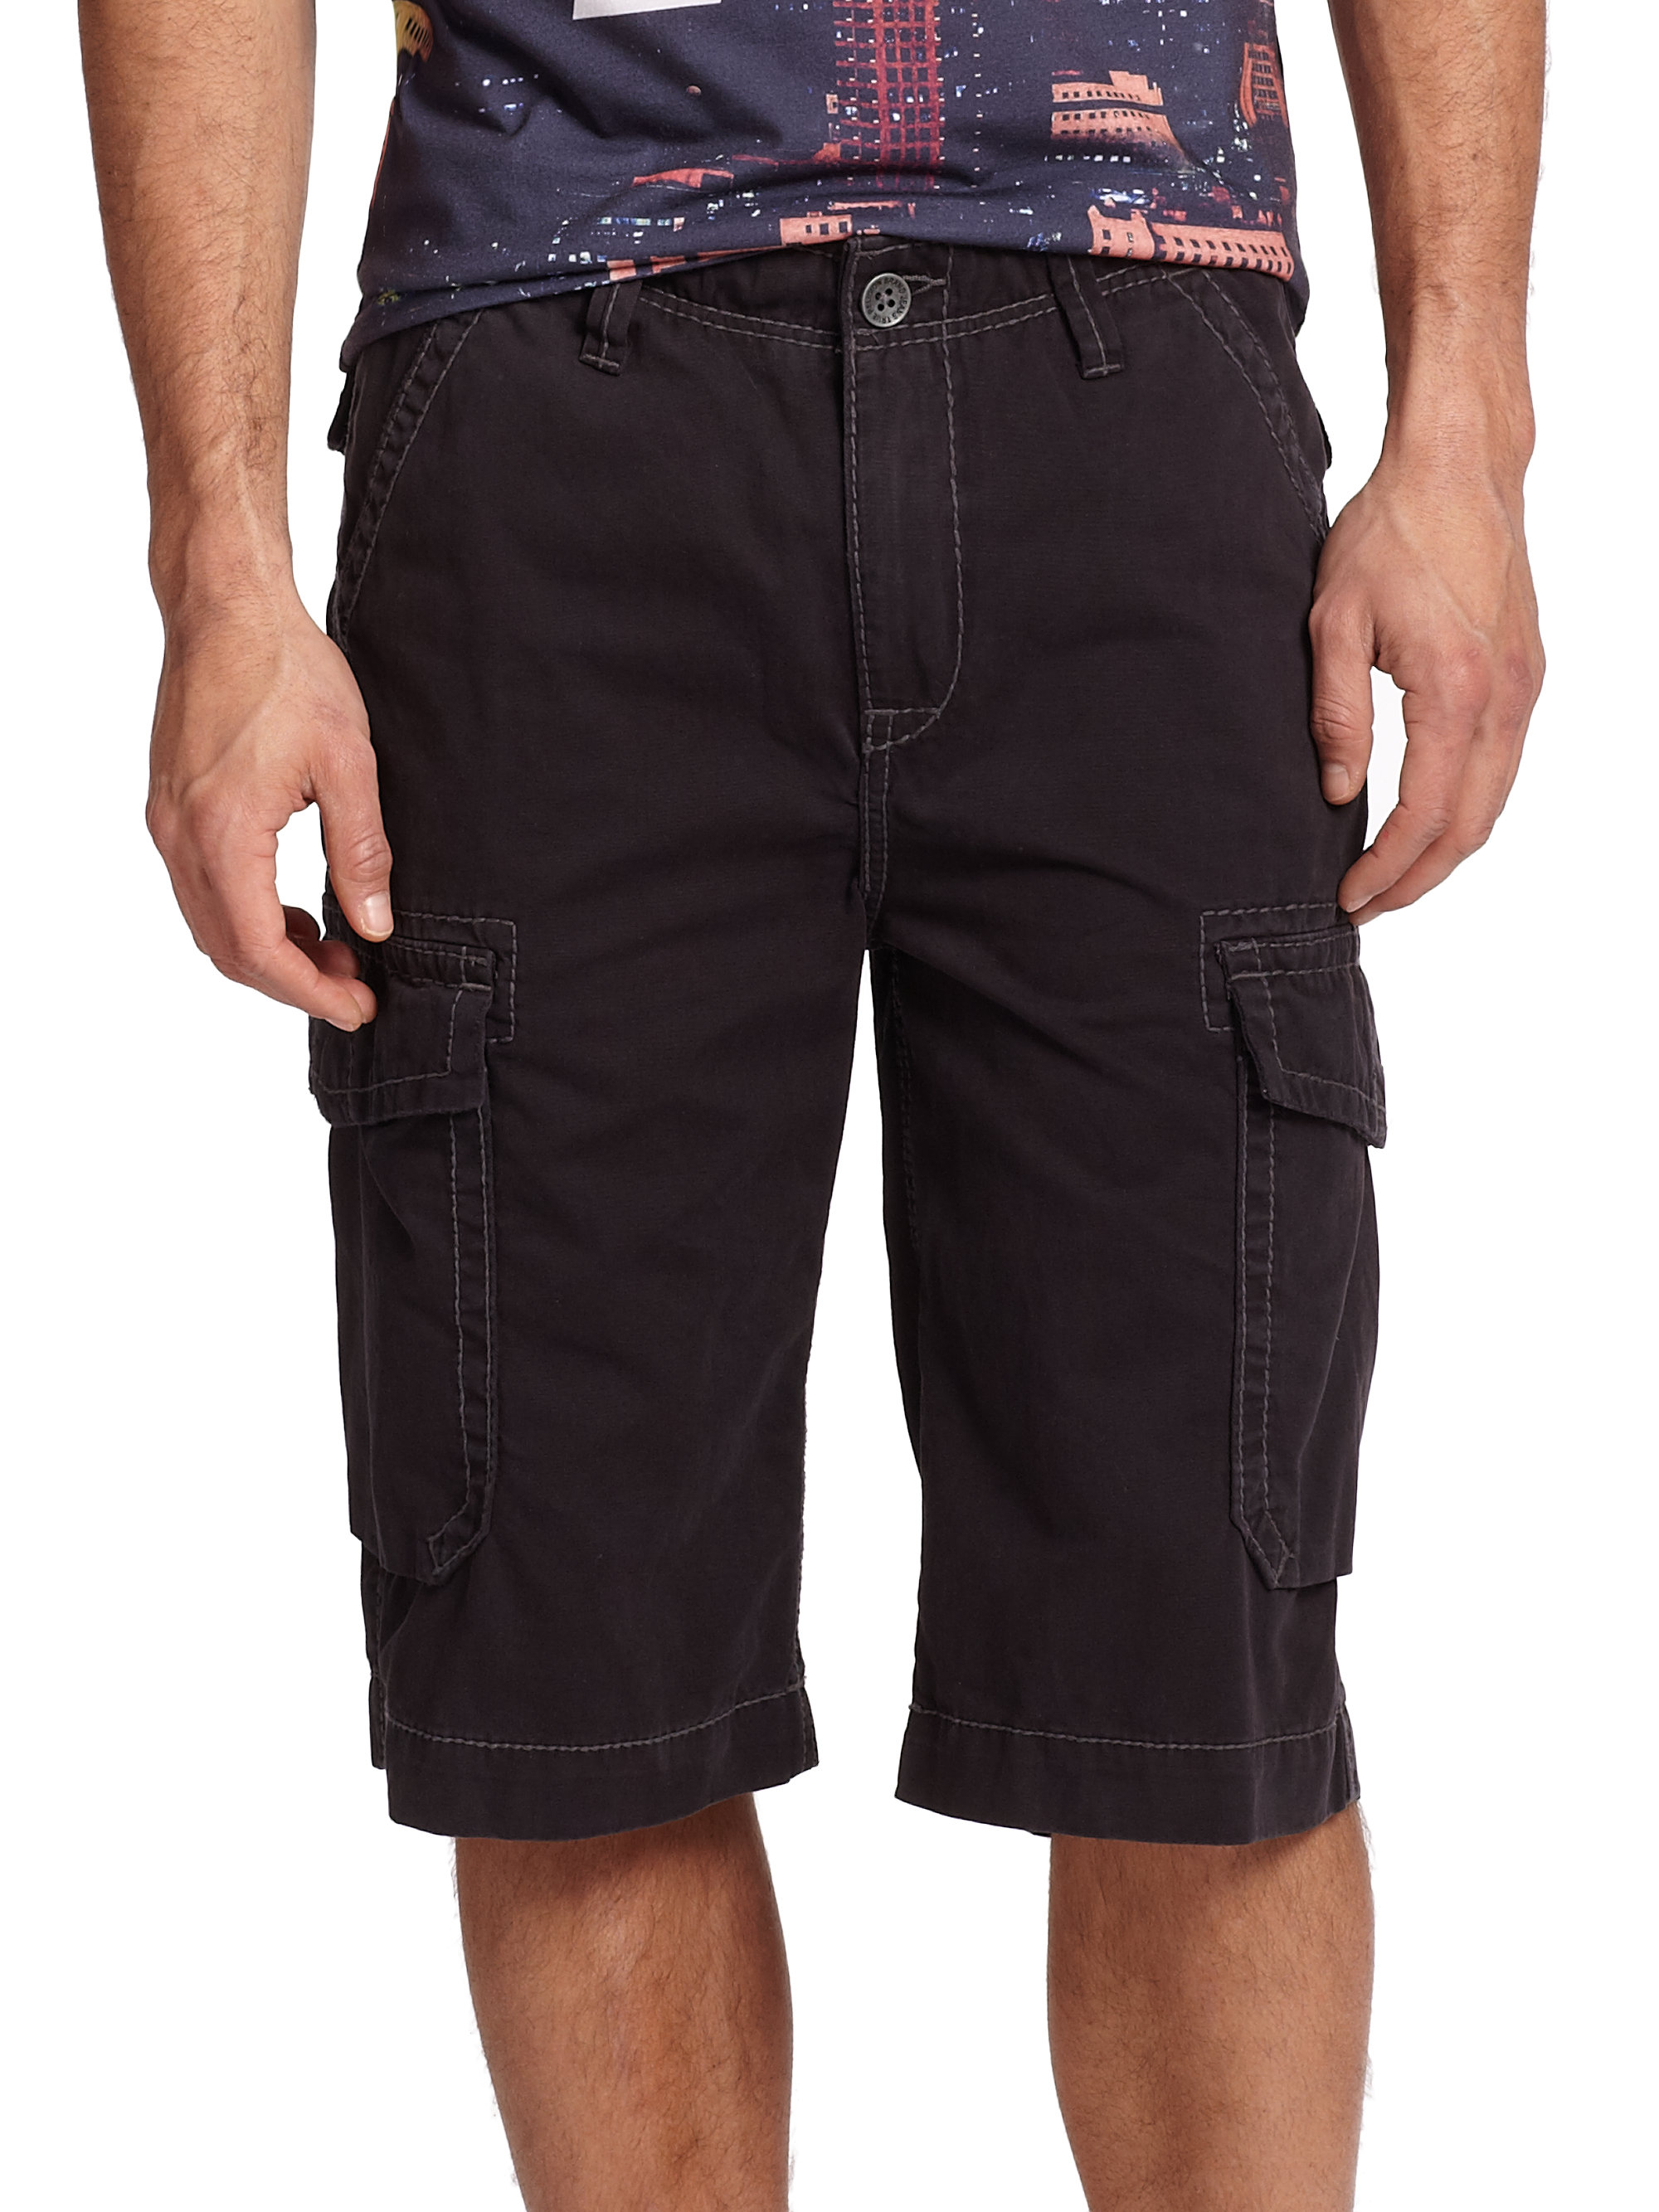 True Religion Trooper Cargo Shorts in Black for Men - Lyst